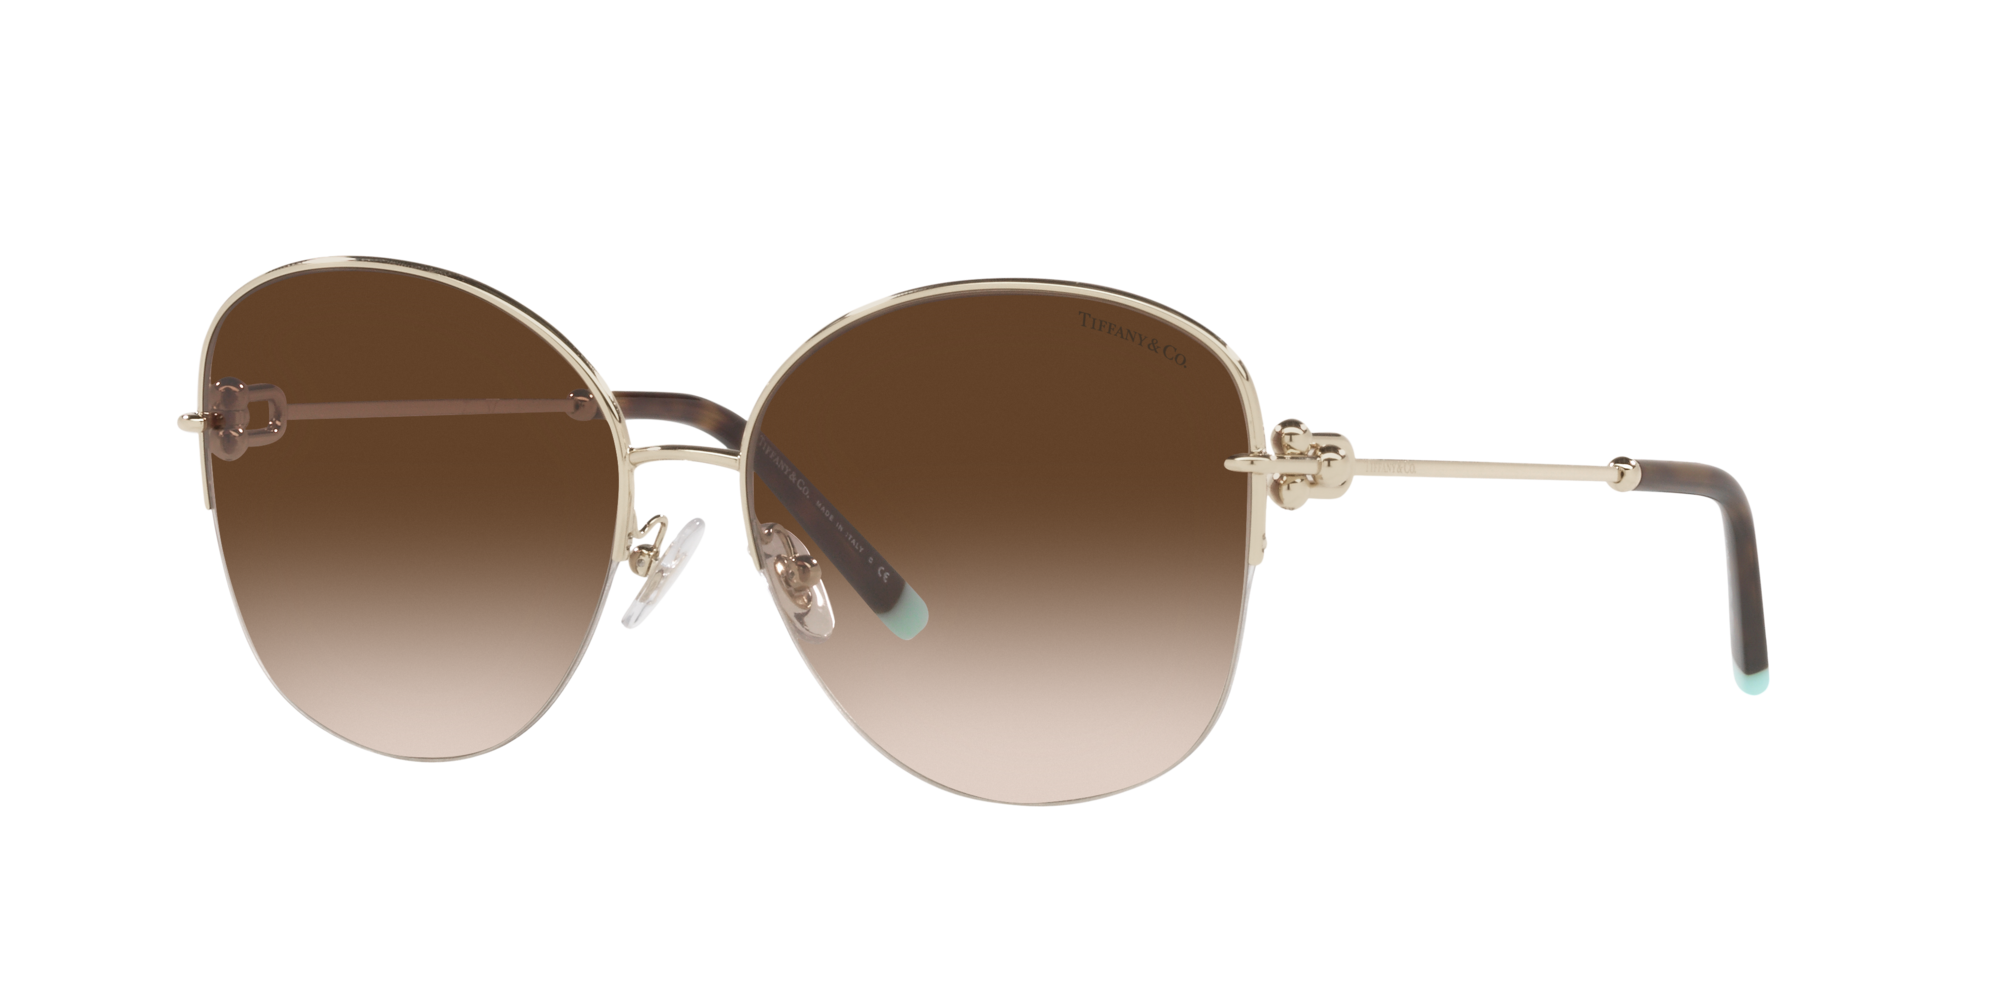 Tiffany HardWear Sunglasses in Silver-colored Metal | Tiffany & Co.